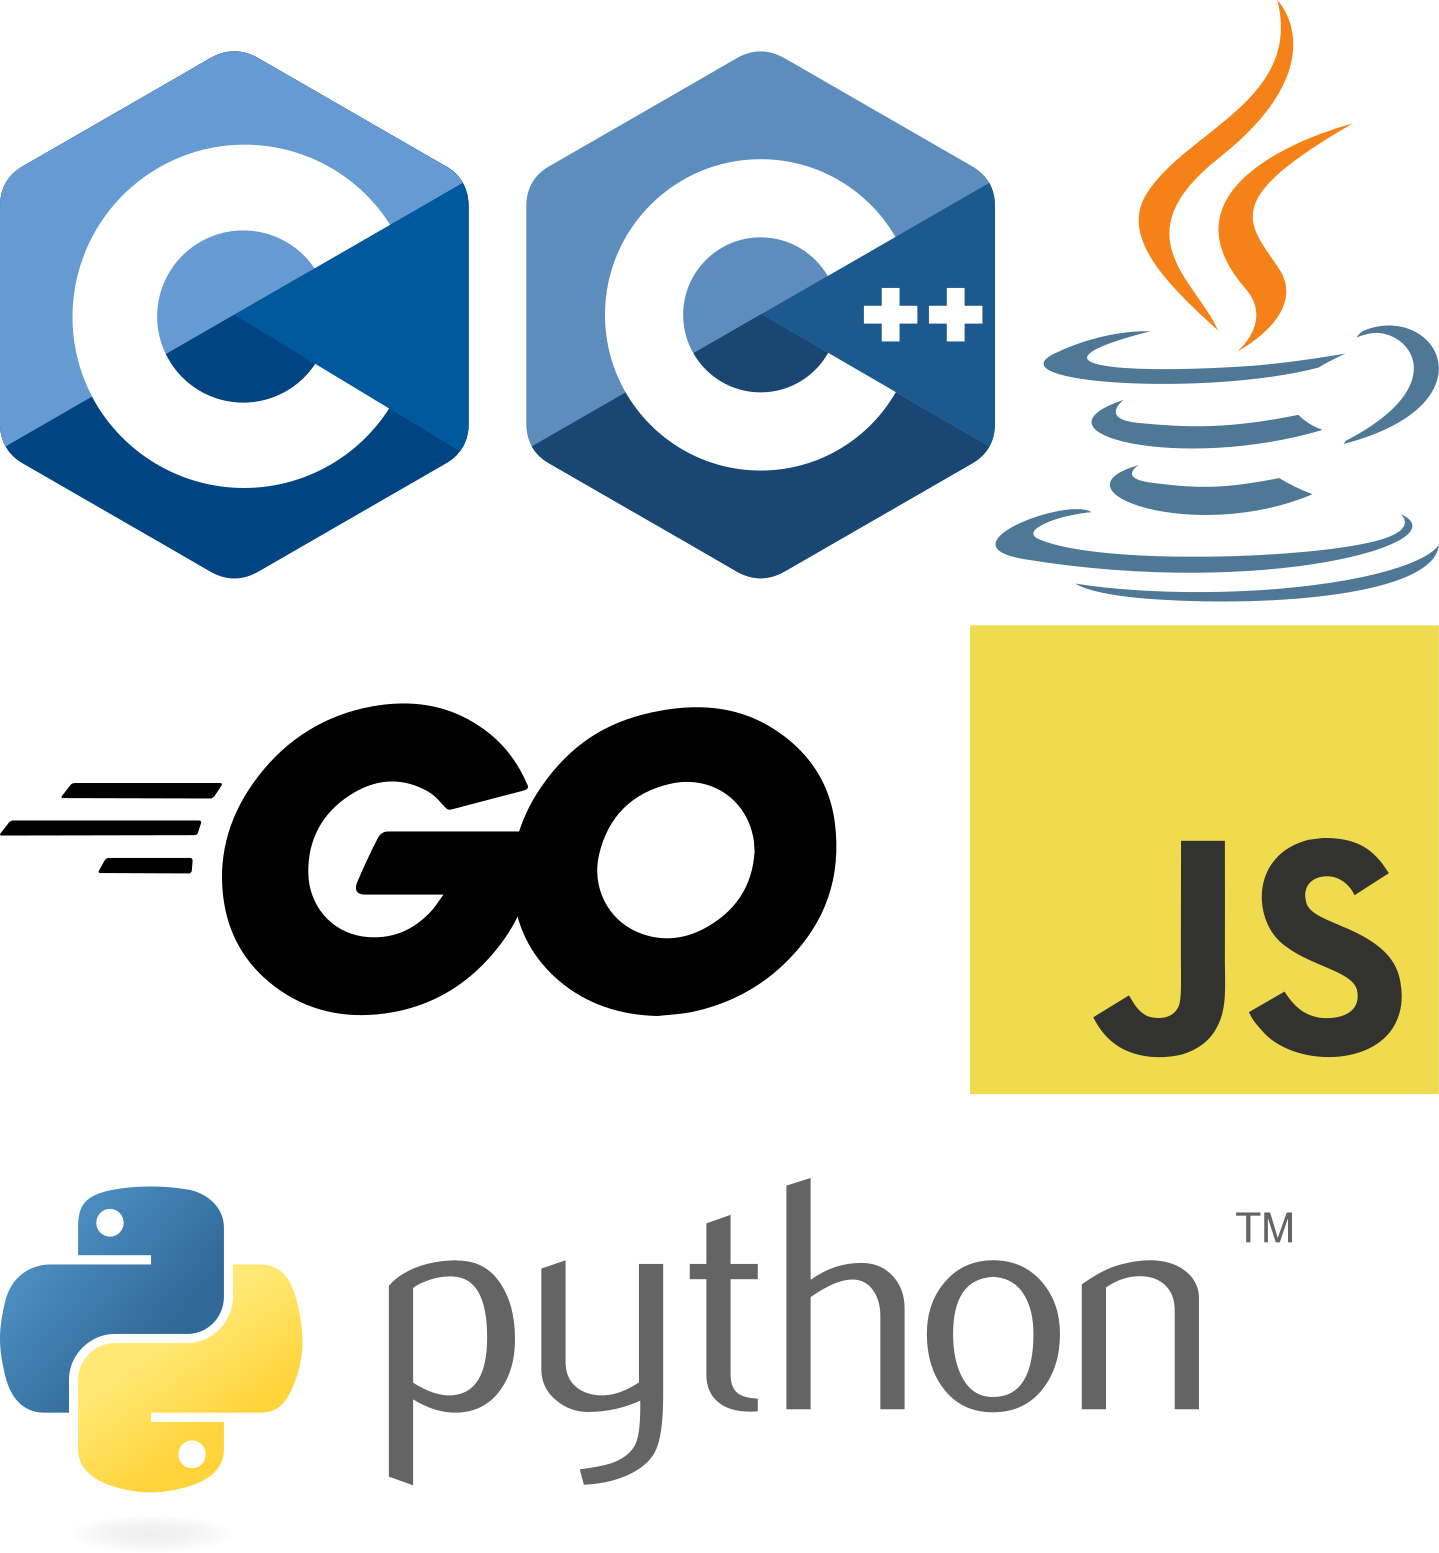 Administration and Development by dexor using C/C++, Java, Go, Java script, python